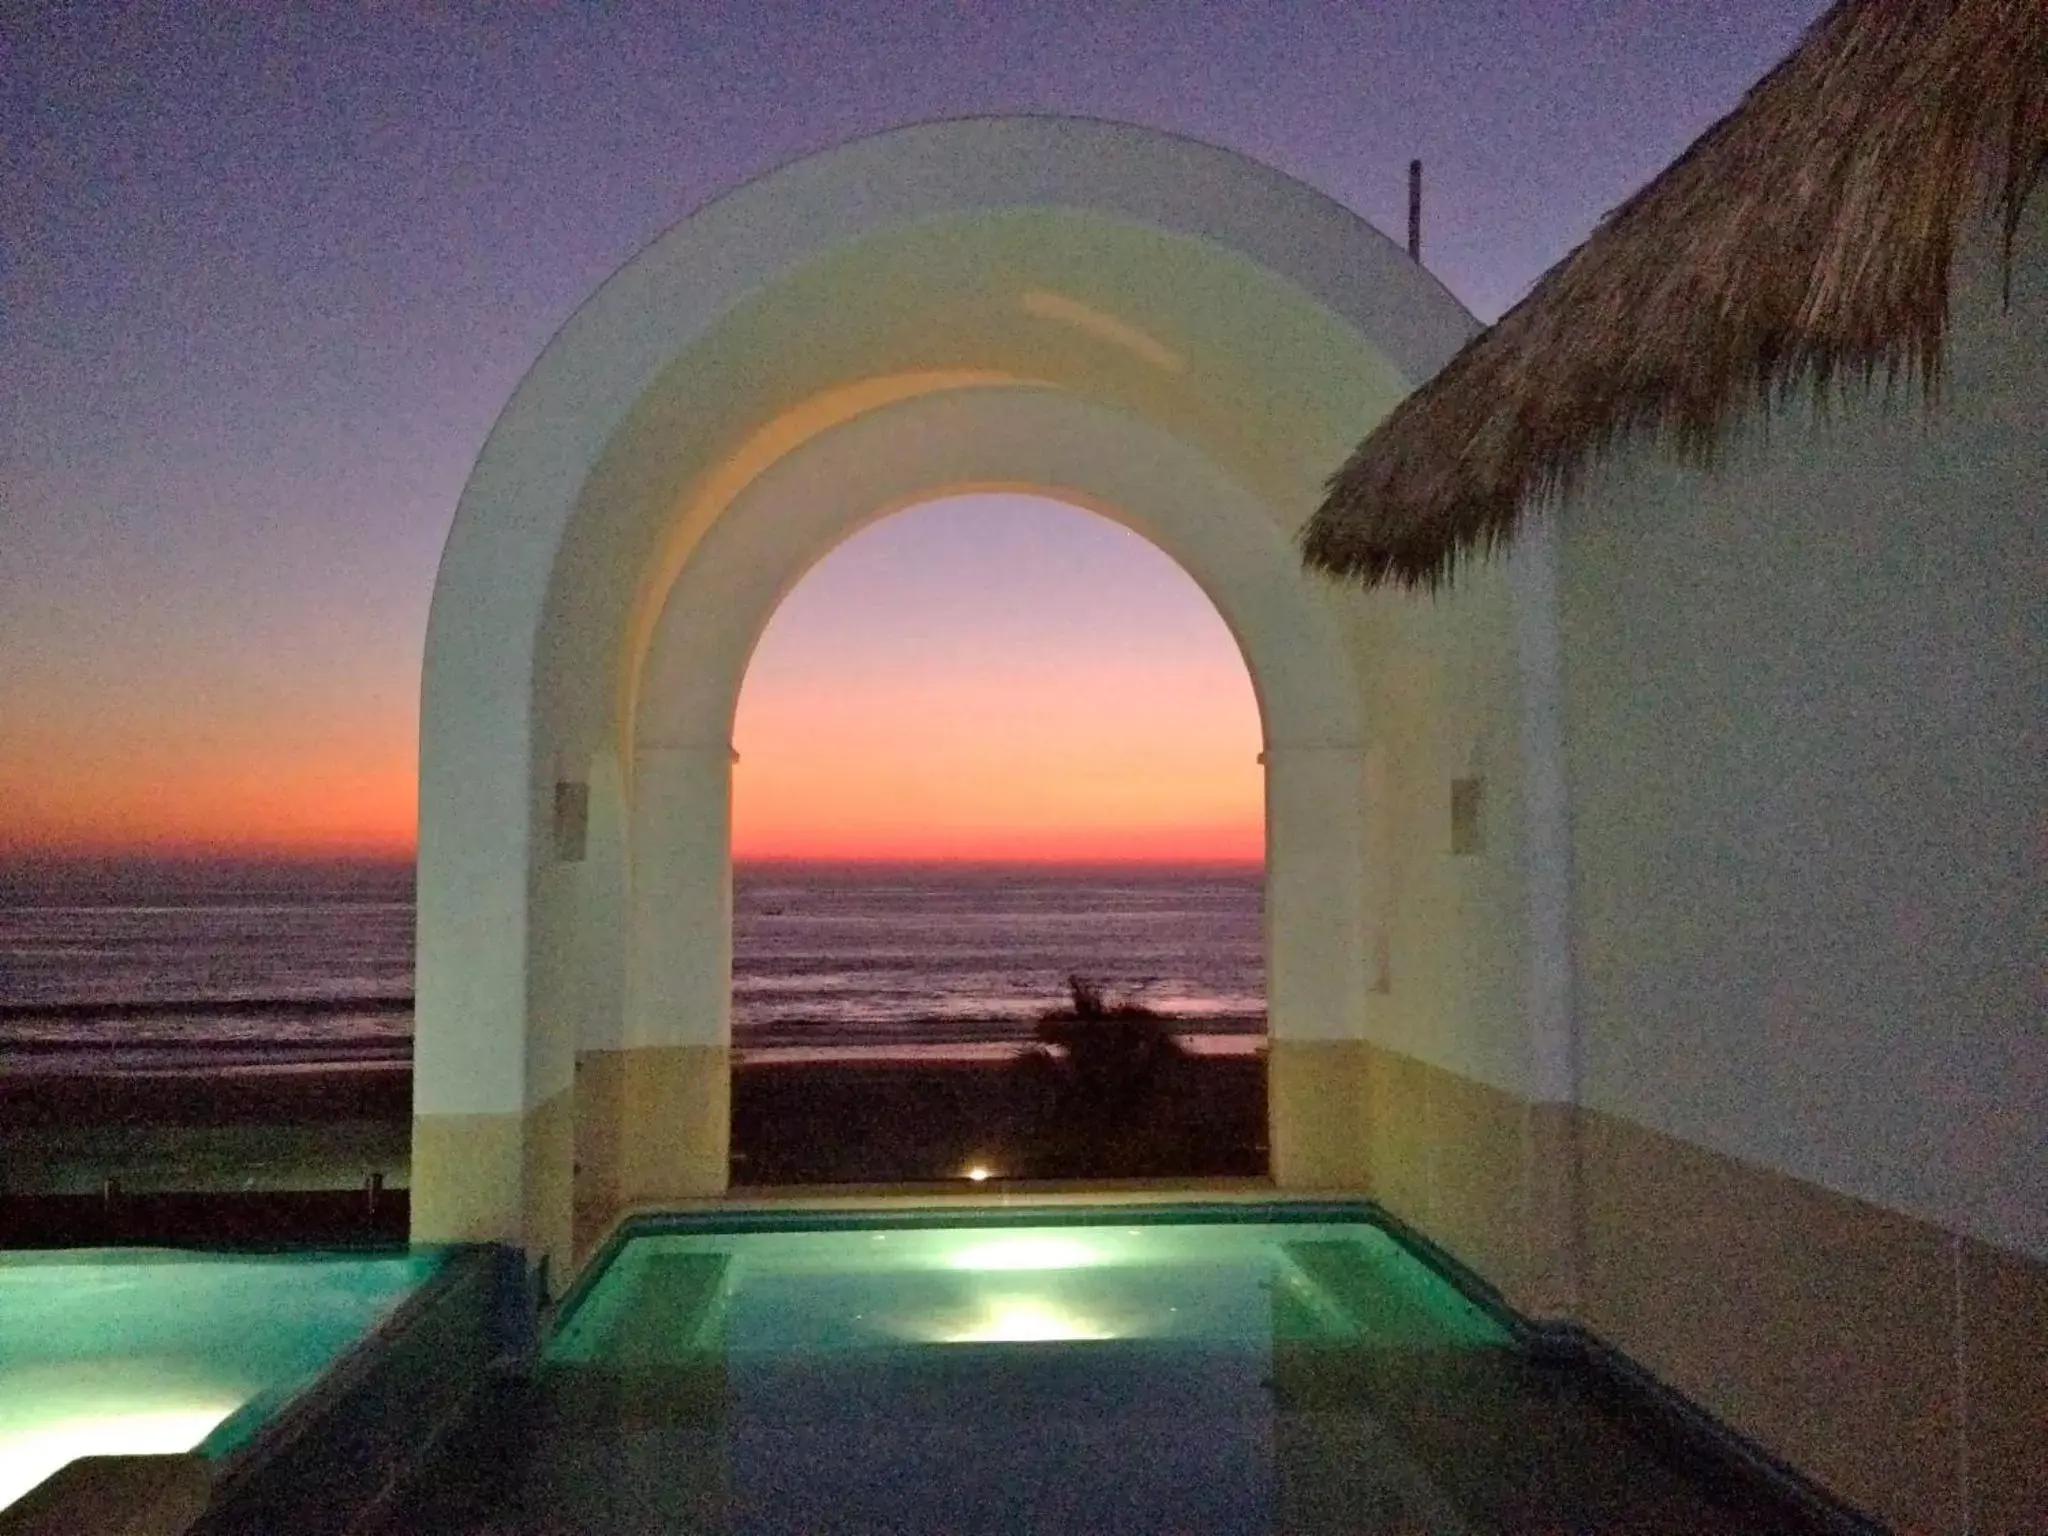 Swimming pool, Sunrise/Sunset in Hotel Blater